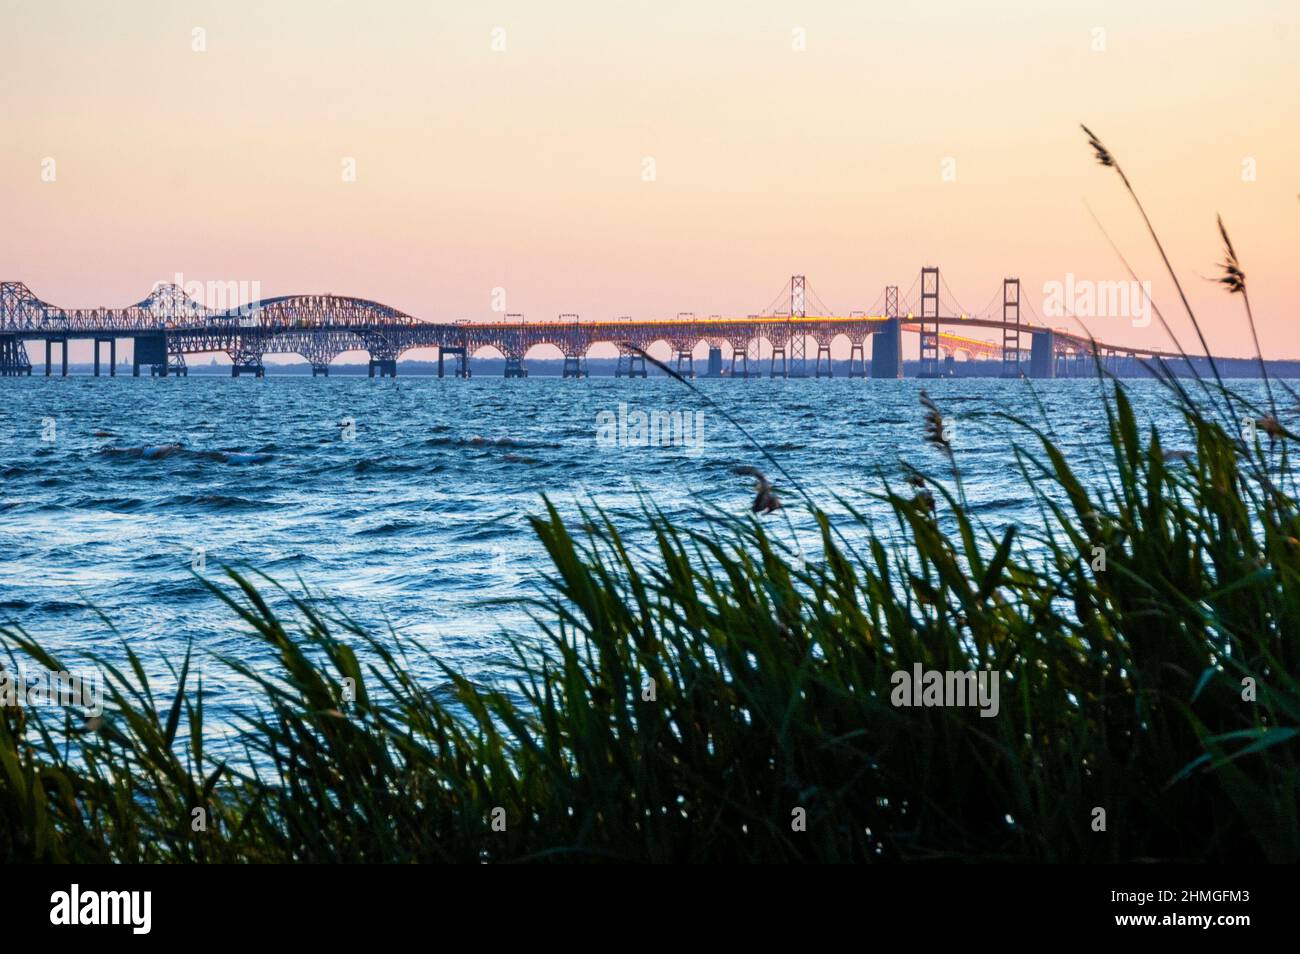 Sea grasses frame the Chesapeake Bay Bridge over Maryland's Chesapeake Bay. Stock Photo